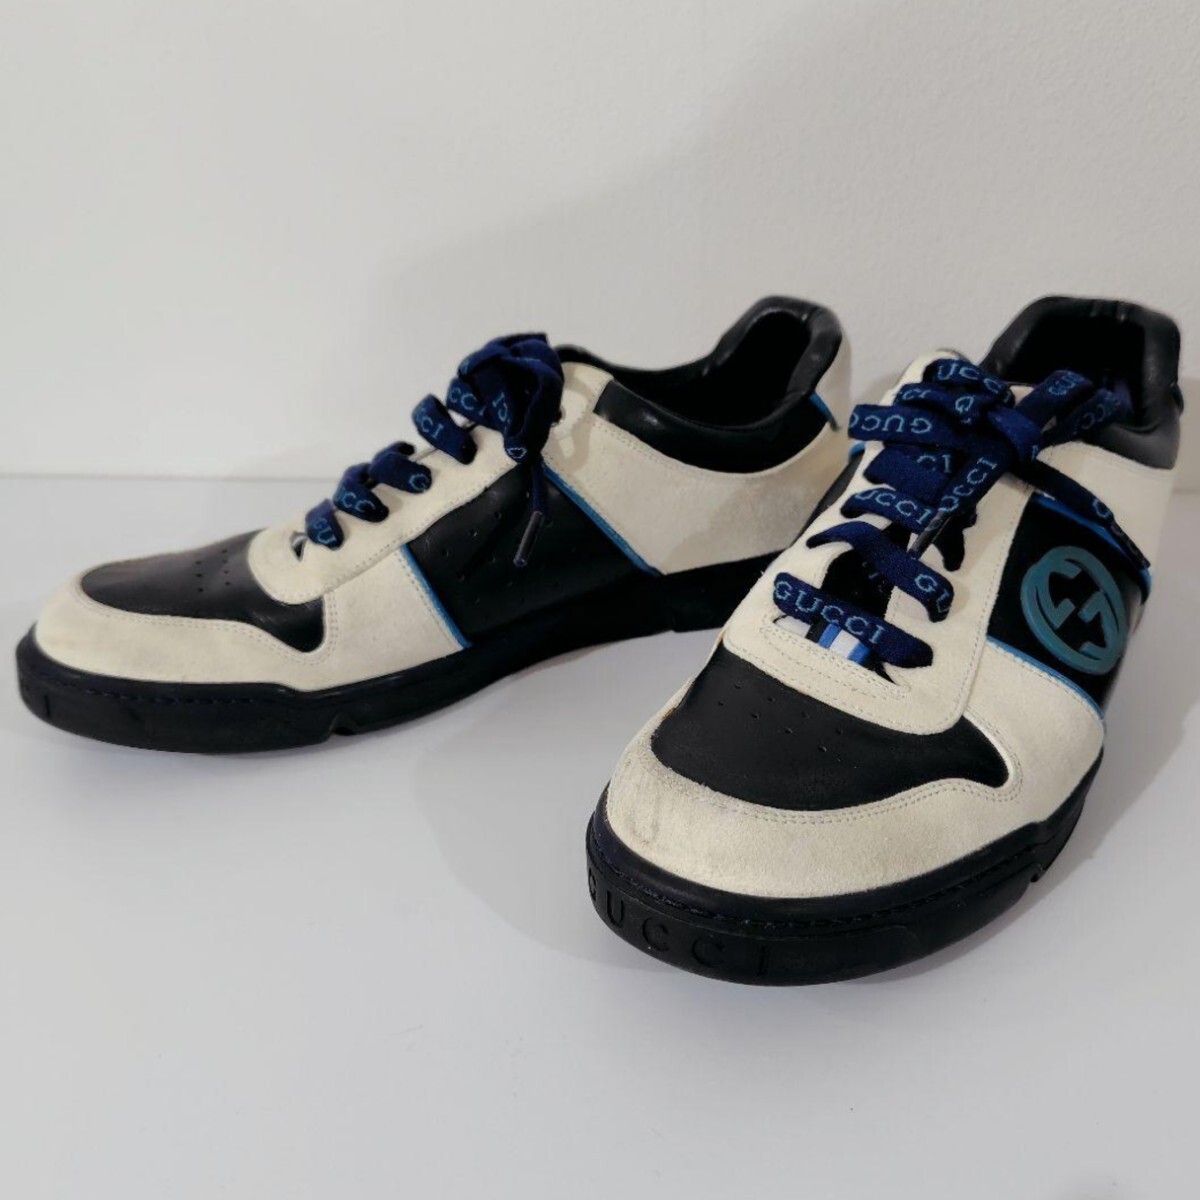 GUCCI Gucci спортивные туфли мотополиция цвет Inter locking G 26cm синий белый с логотипом обувь шнур 